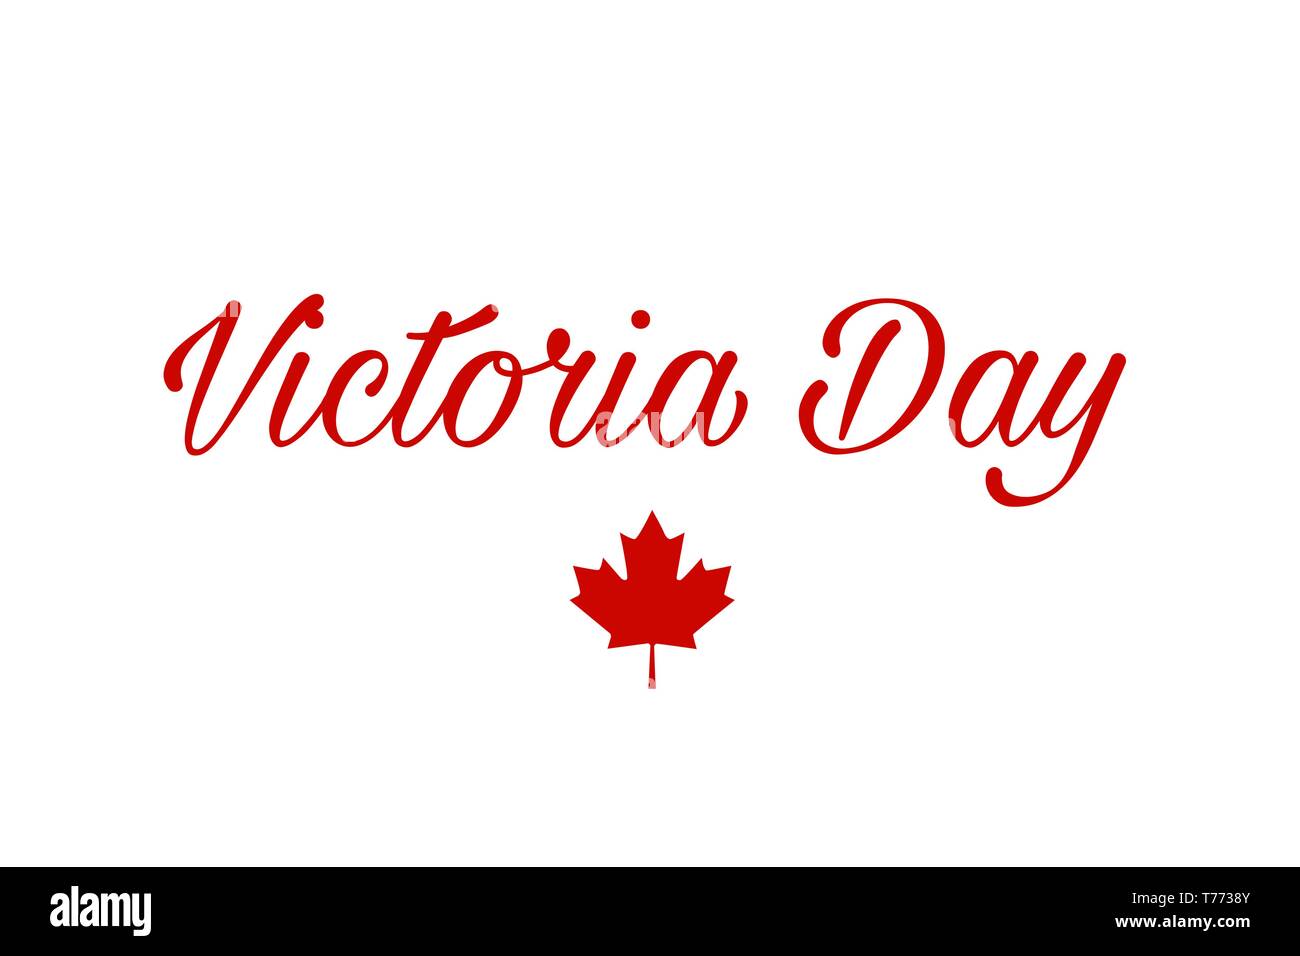 Vector Illustration to Celebrate Victoria Day. Stock Vector